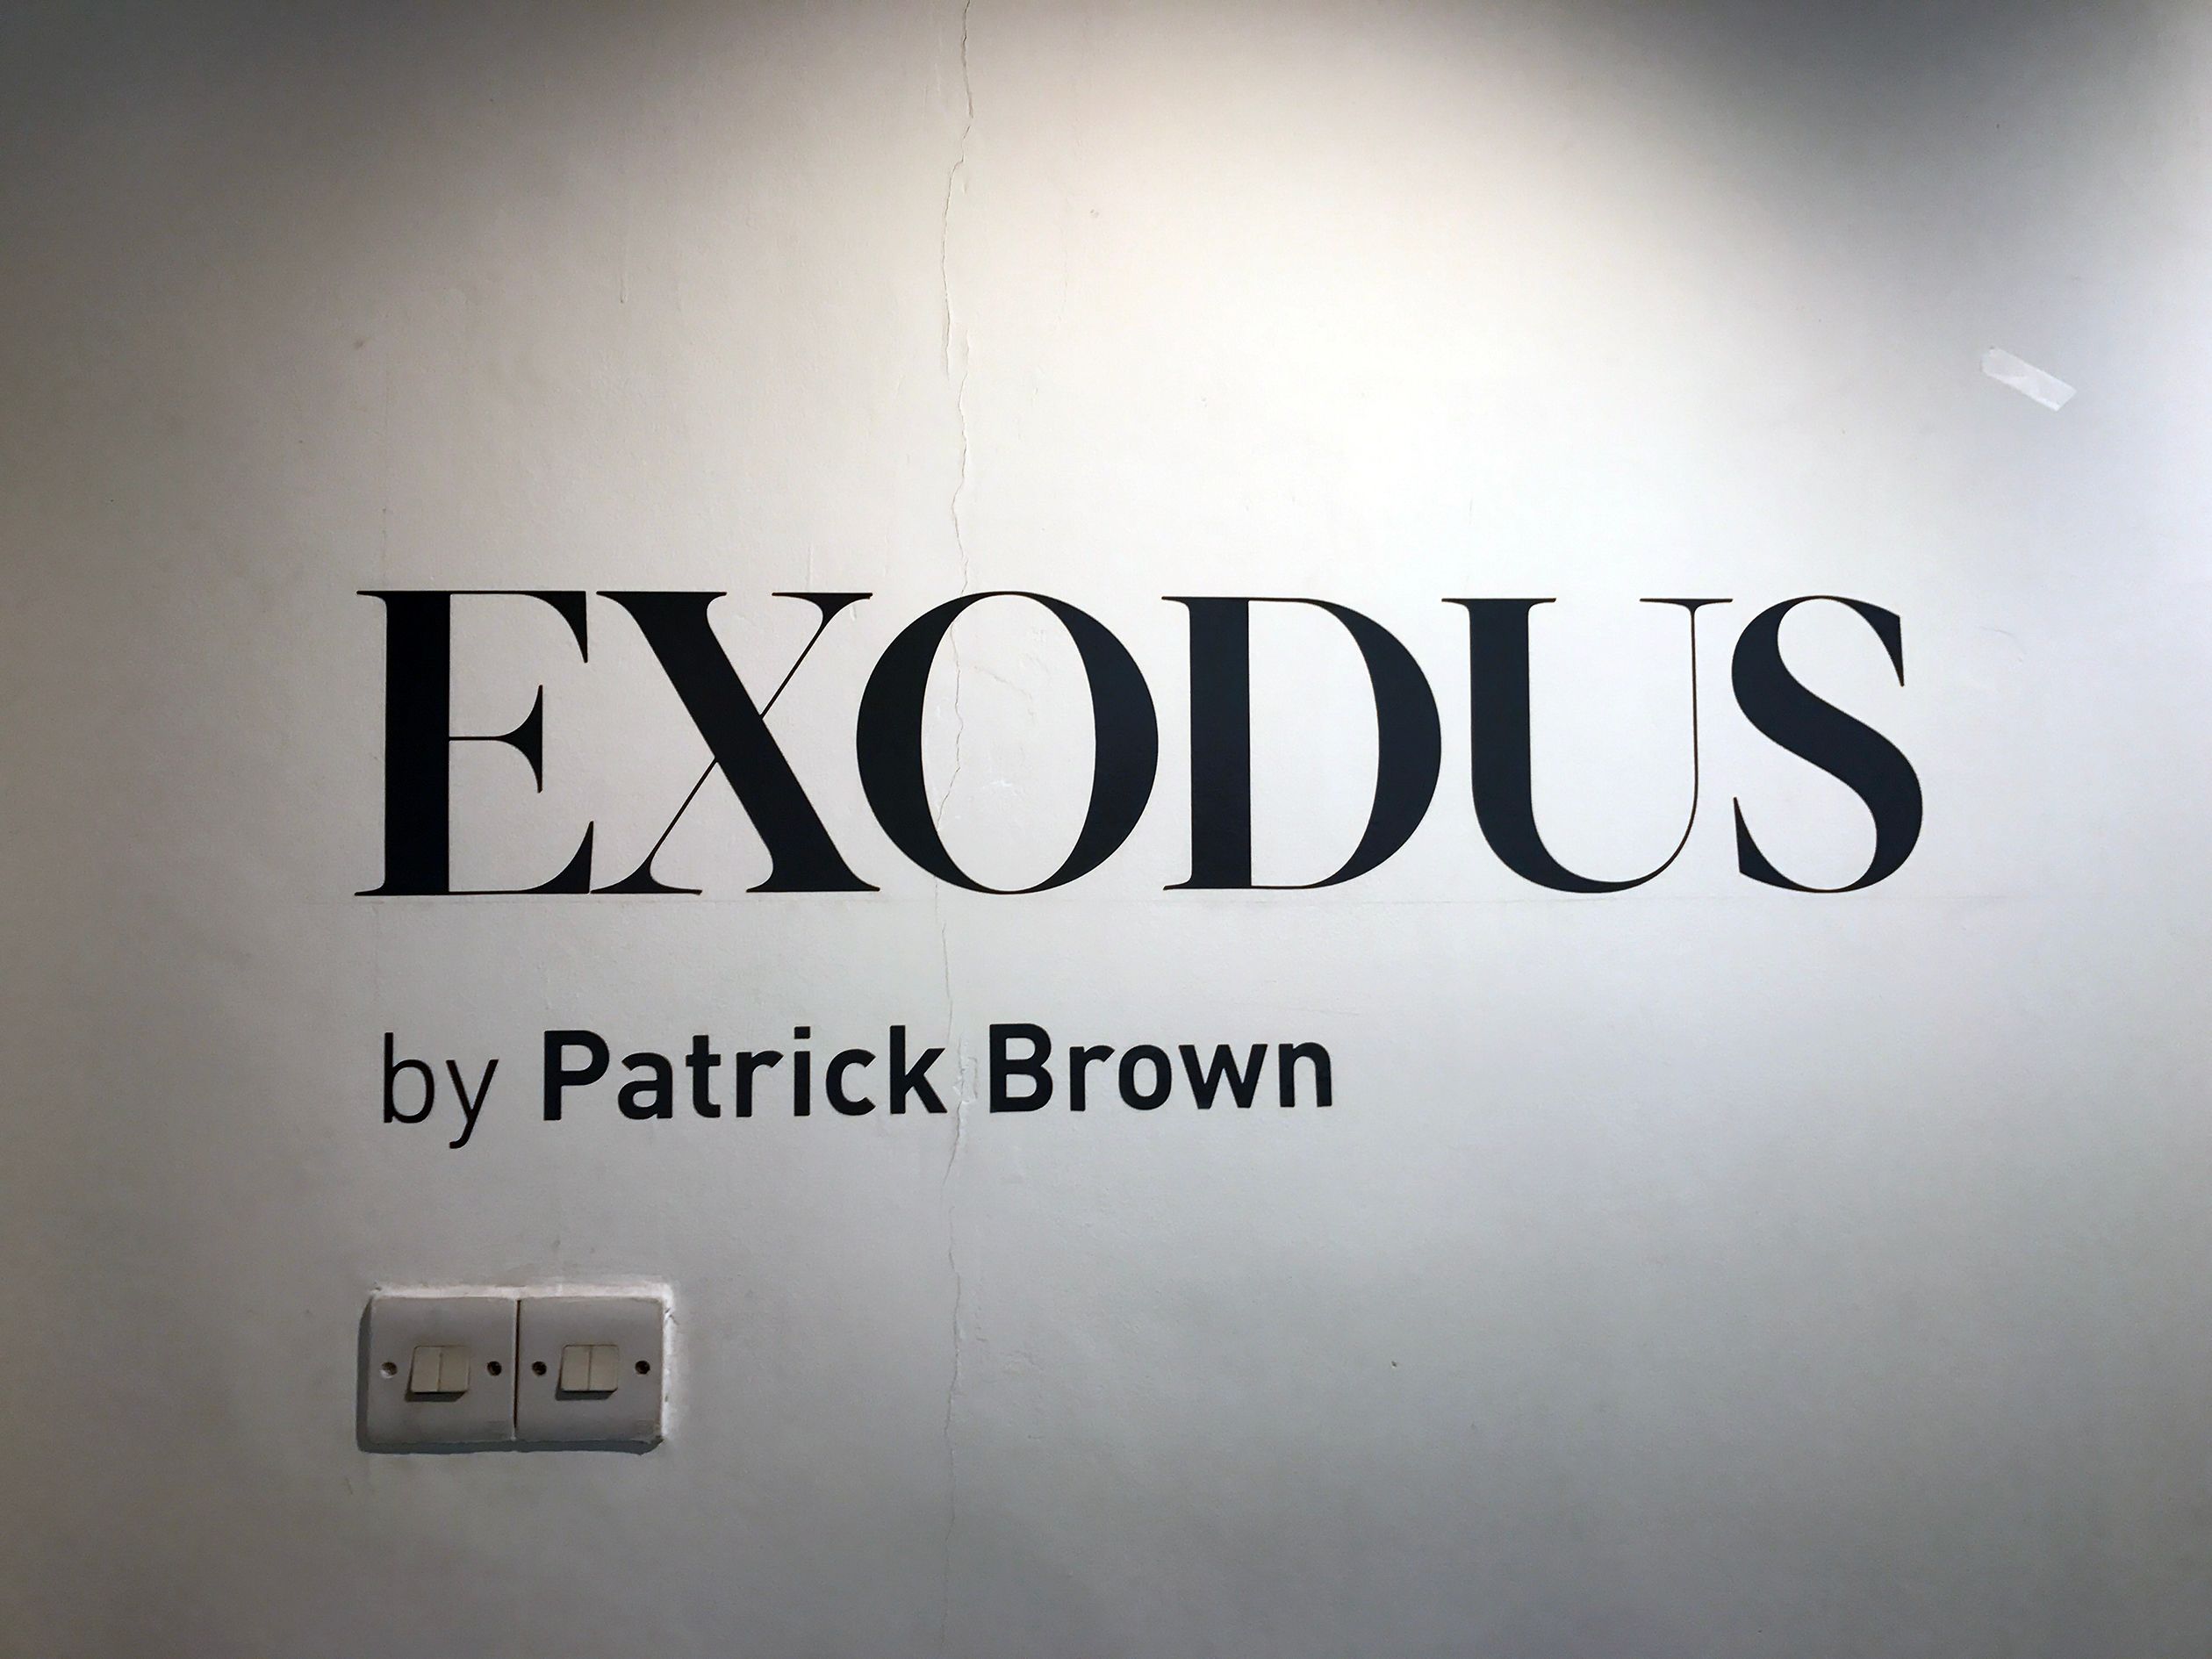 Name of the Exhibition - EXODUS